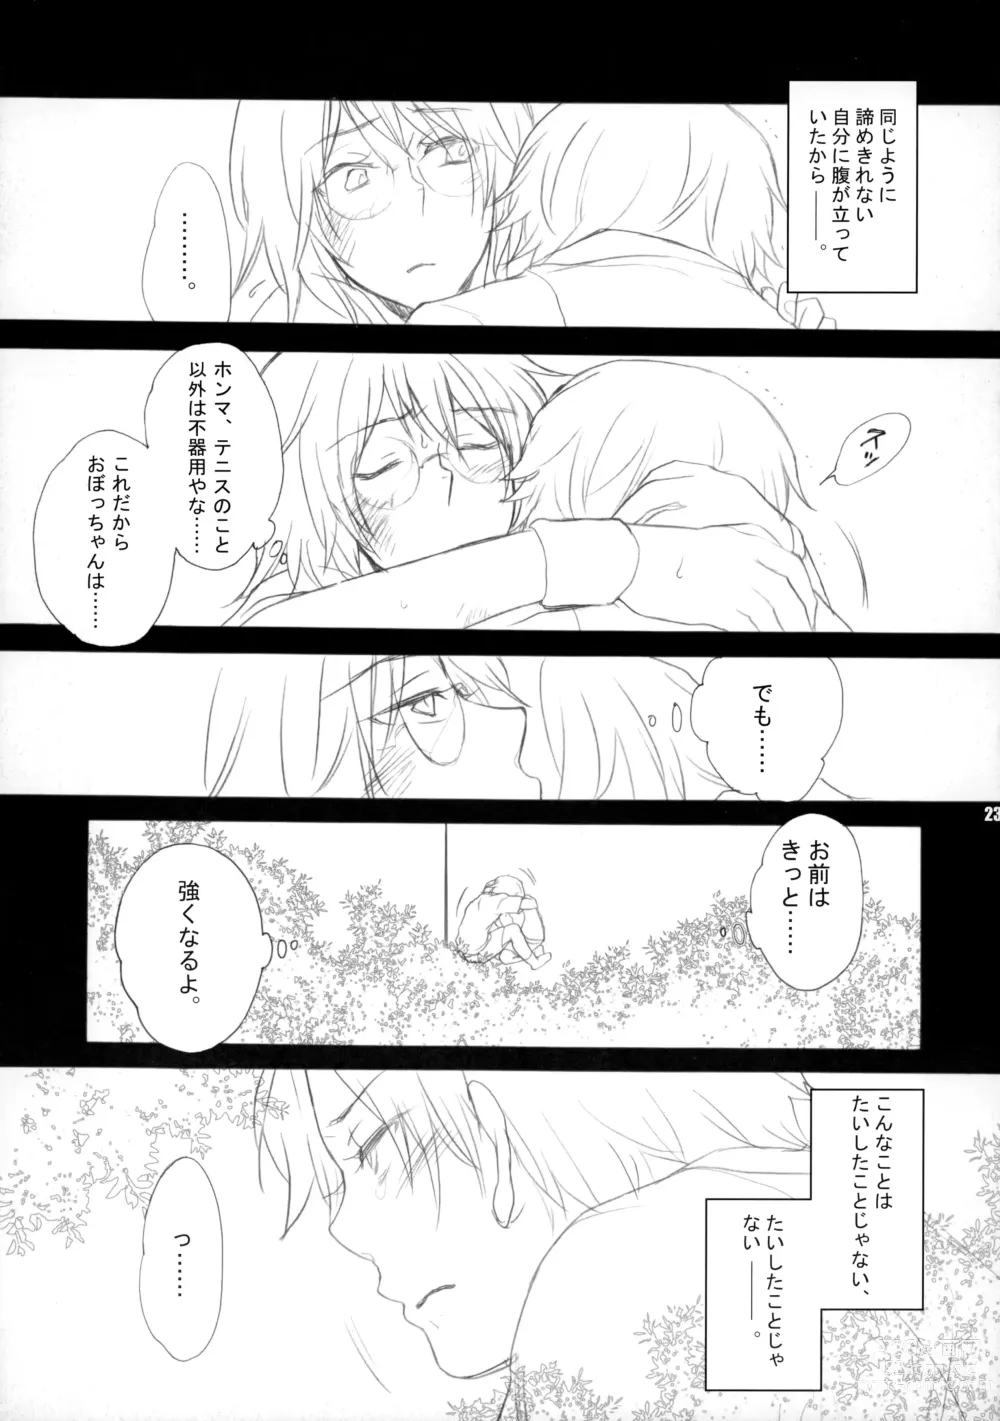 Page 22 of doujinshi 幻視画少年